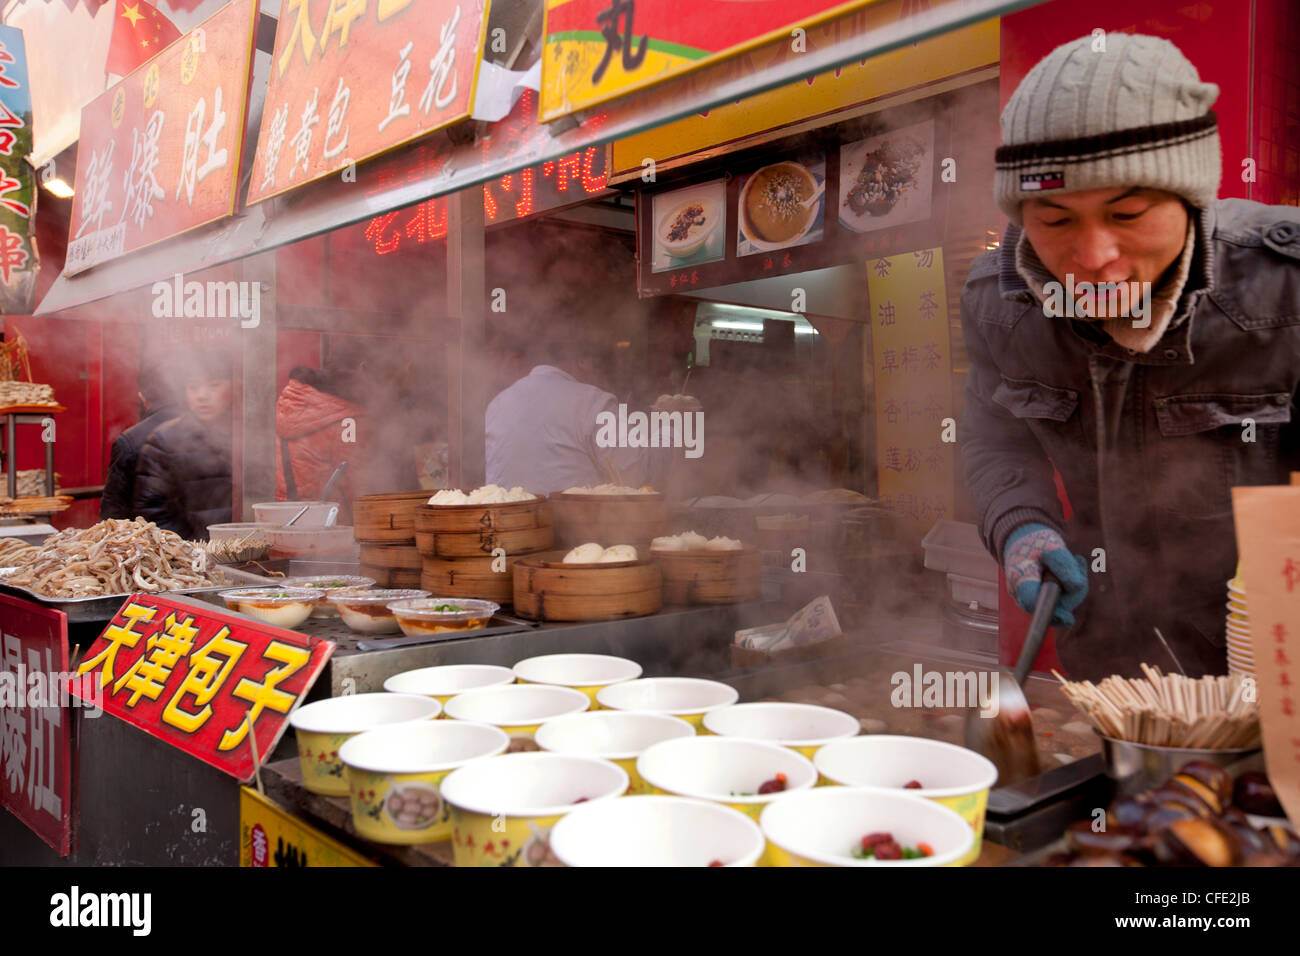 Chinese food, Wangfujing Snack Street, Beijing China Stock Photo